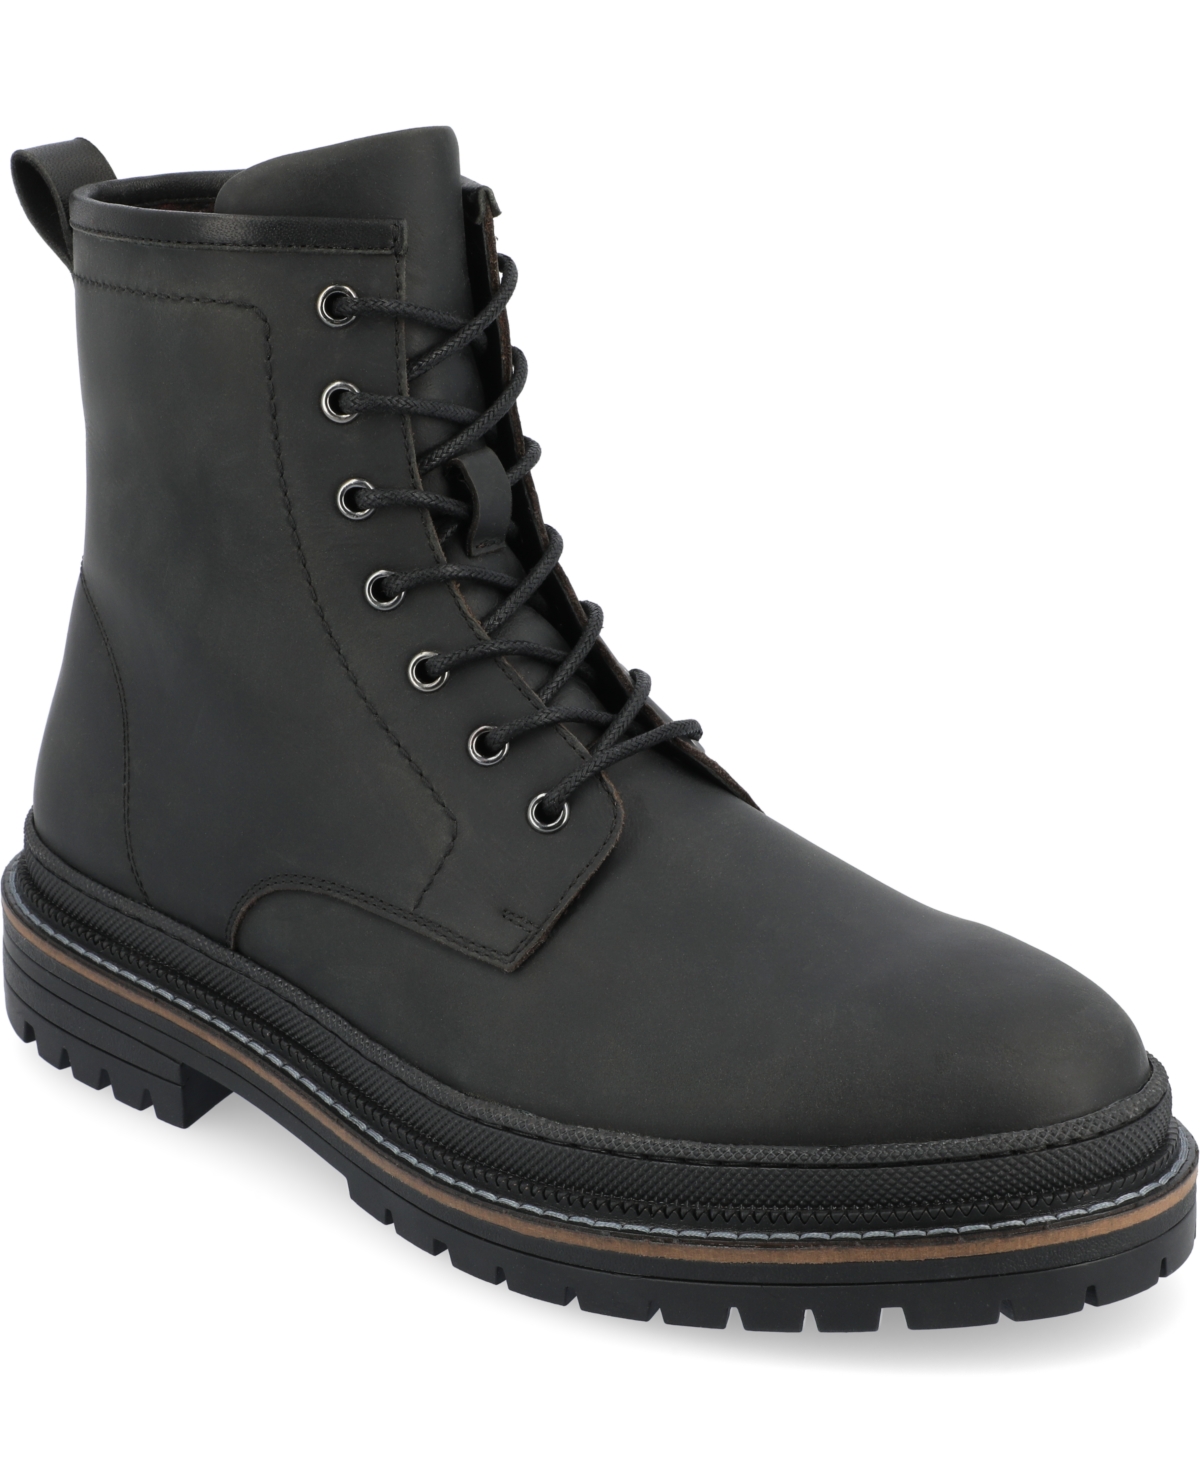 Men's Deegan Tru Comfort Foam Plain Toe Ankle Boots - Brown